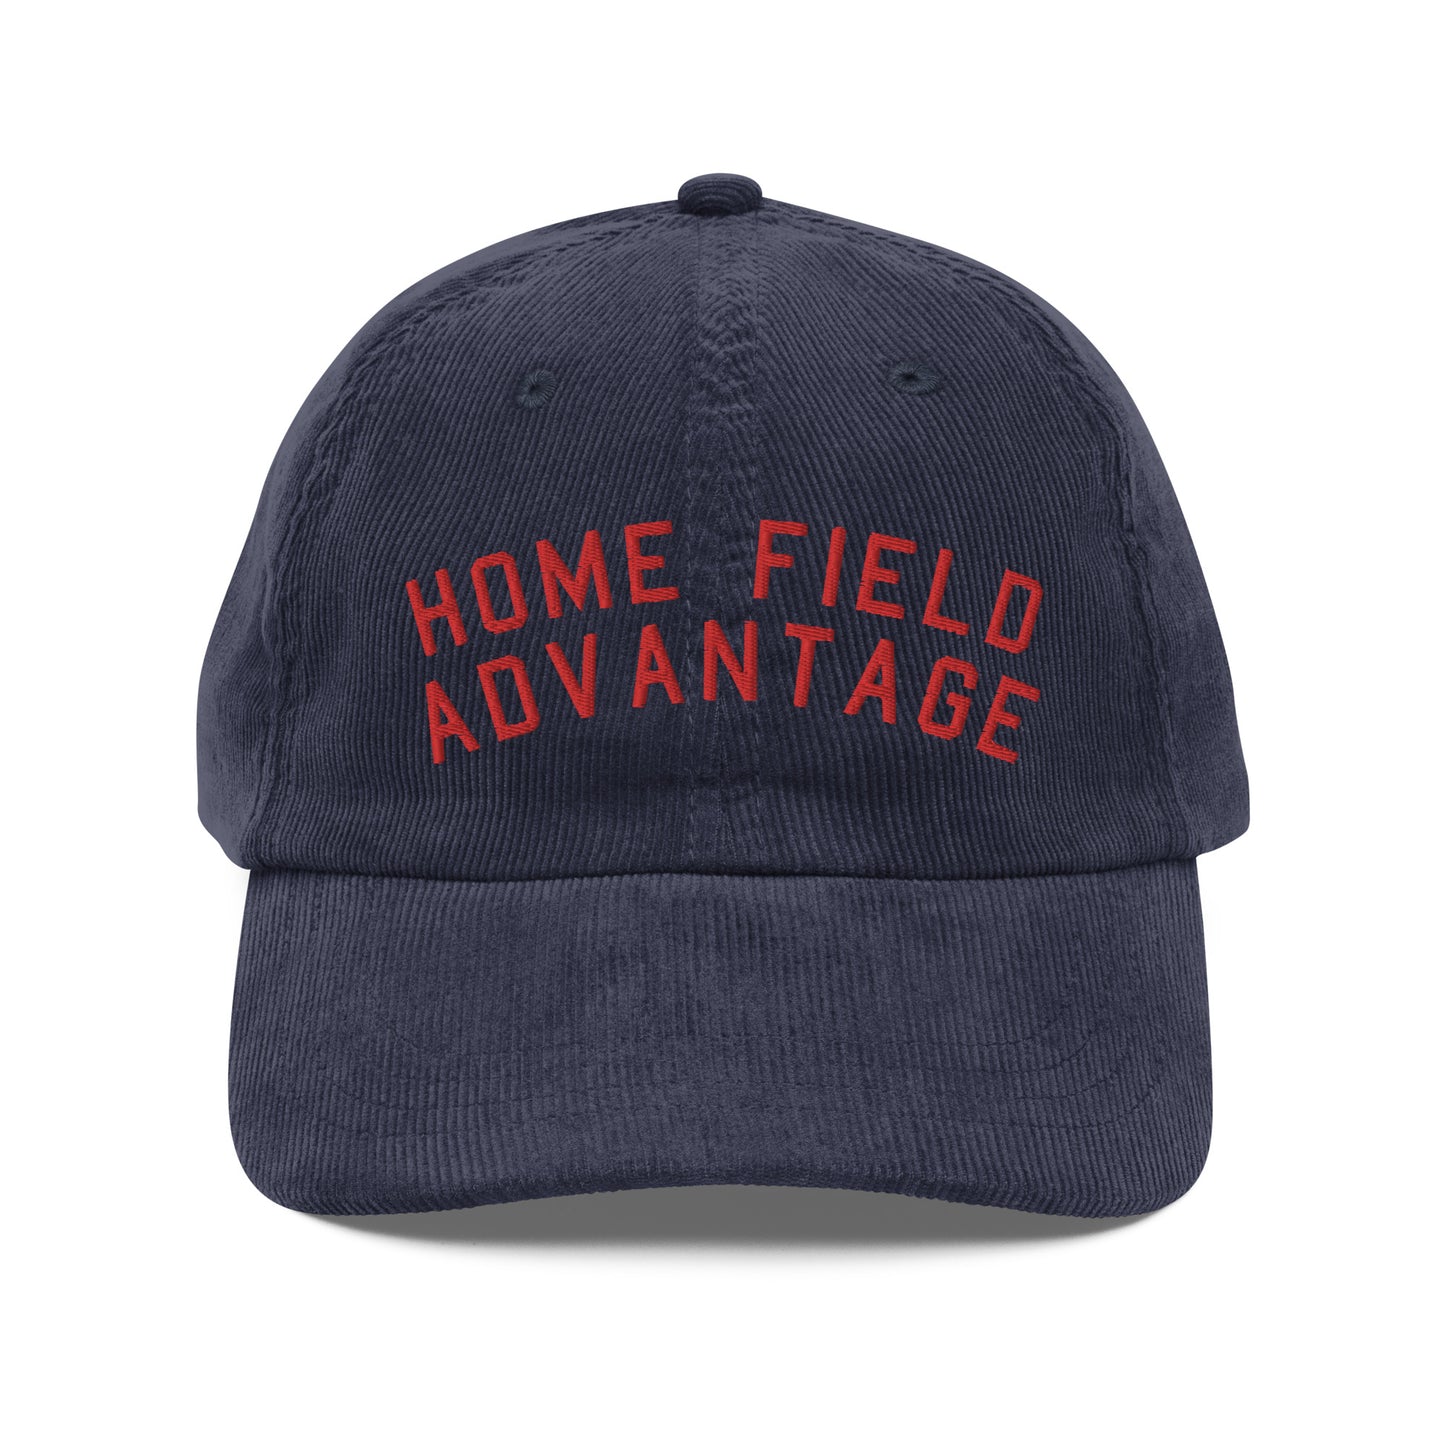 Home Field Advantage Custom Vintage Corduroy Baseball Hat navy red